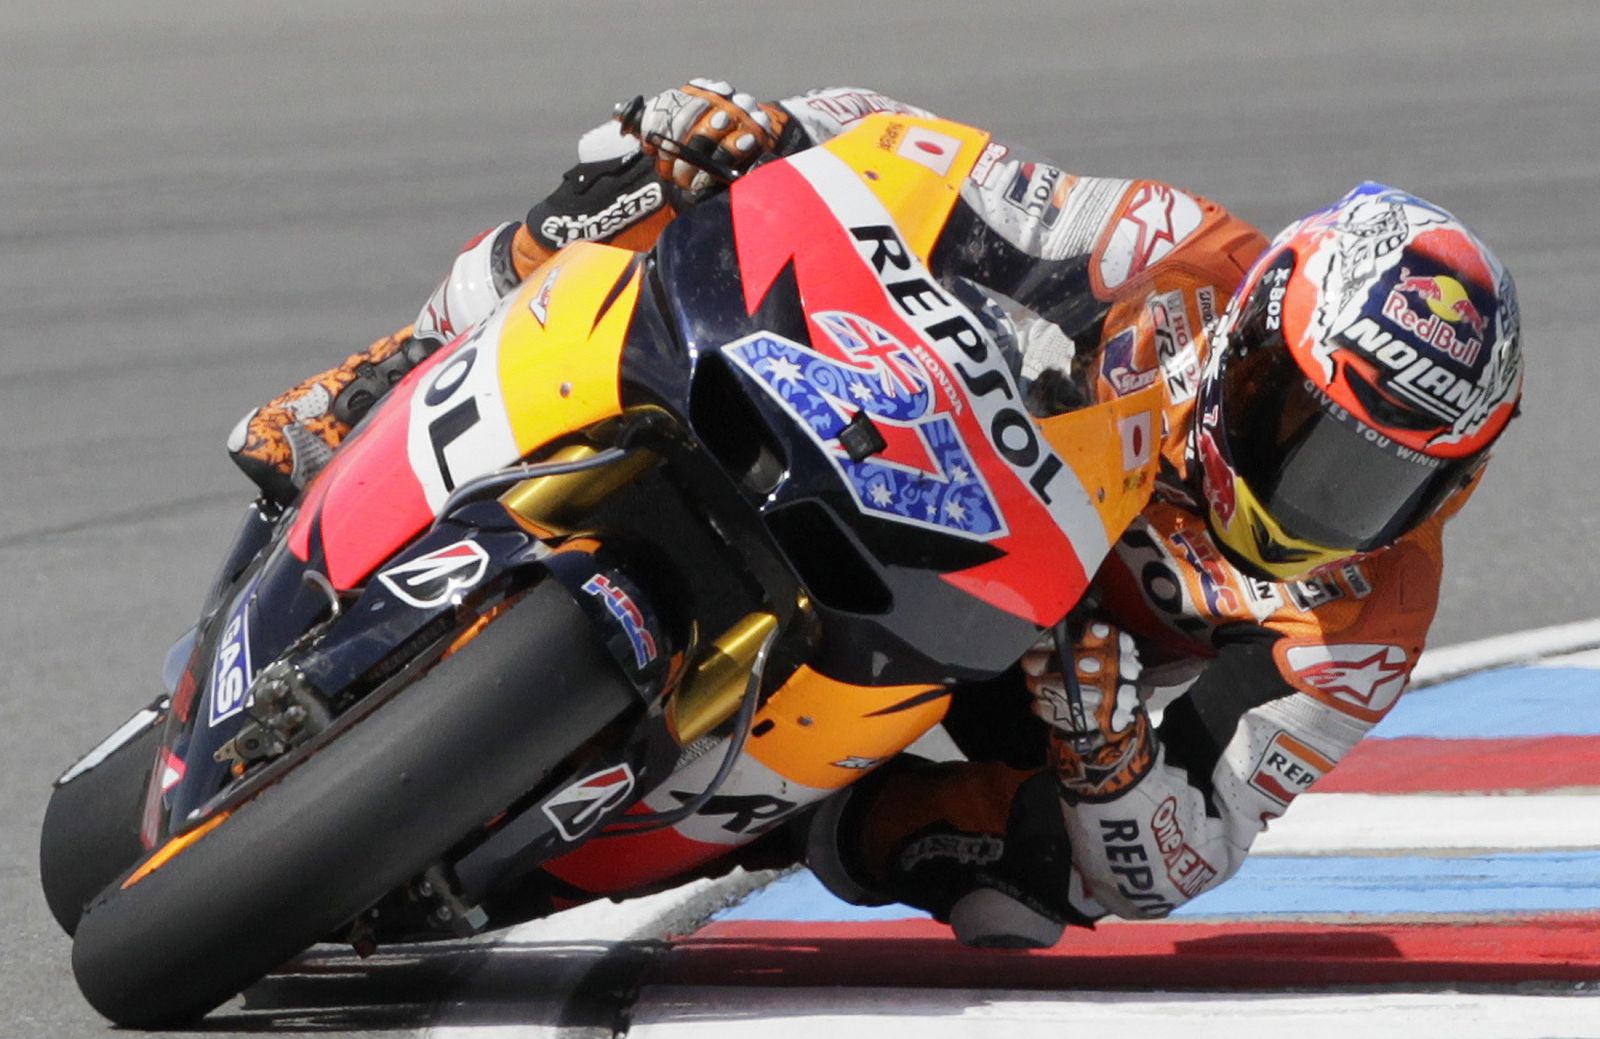 Honda MotoGP rider Casey Stoner of Australia rides to win the Czech Grand Prix in Brno